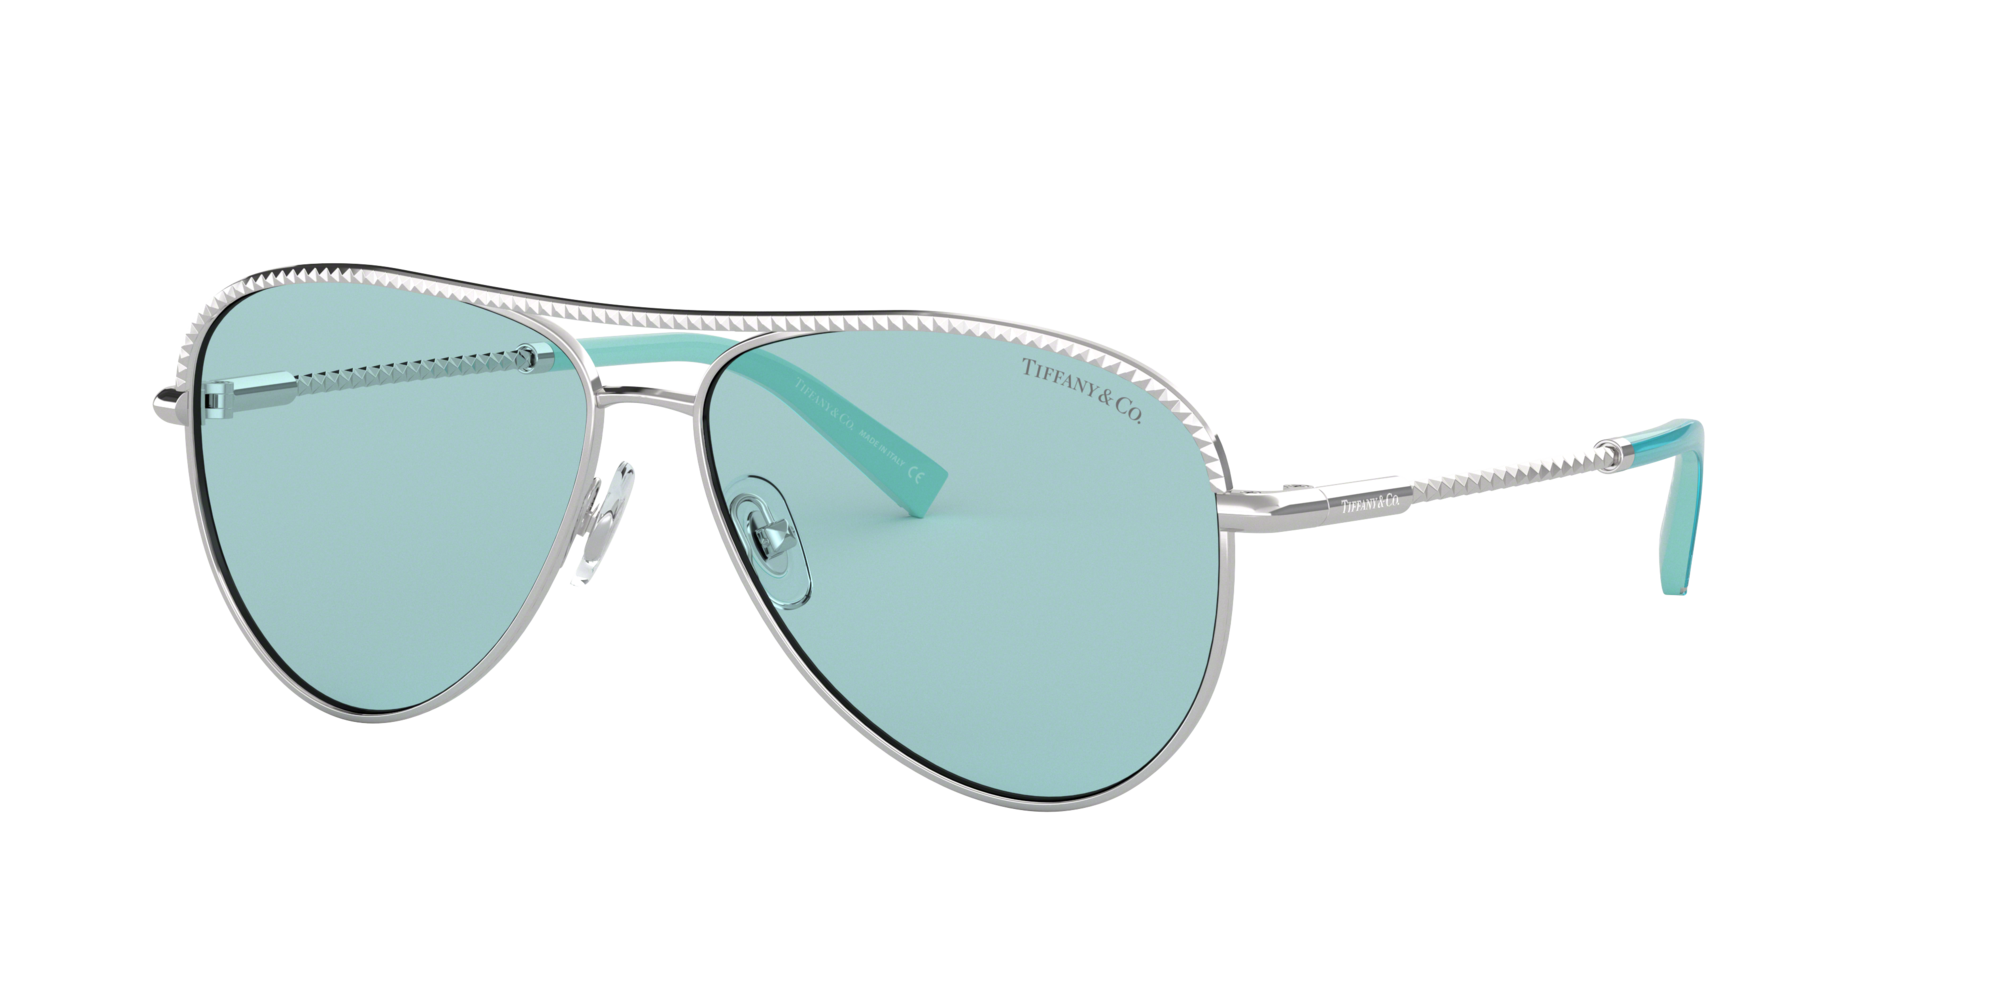 tiffany aviator glasses